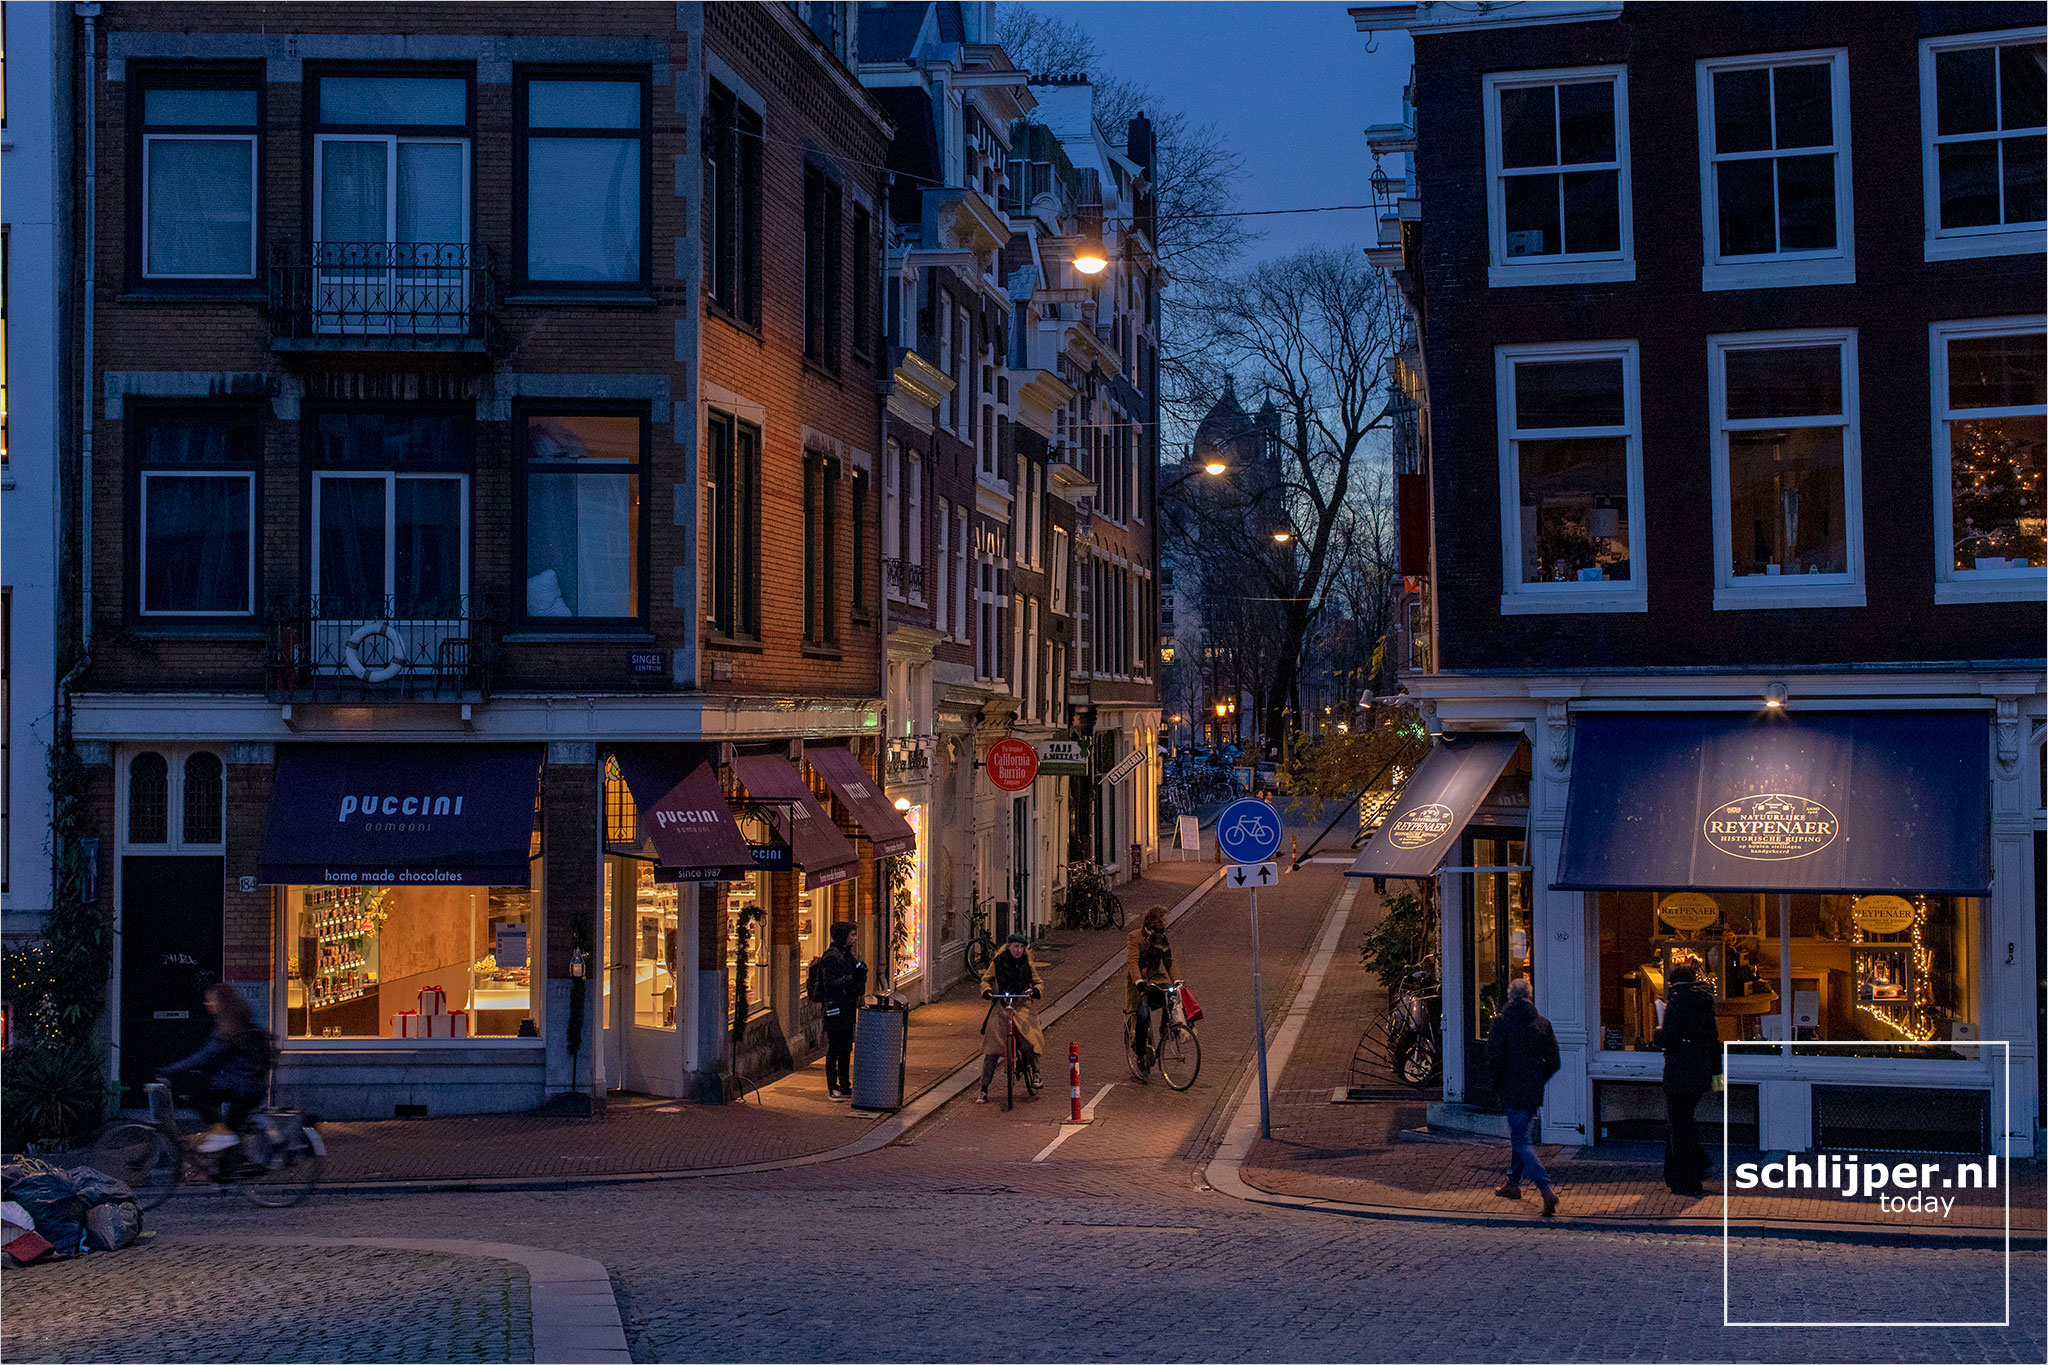 The Netherlands, Amsterdam, 28 december 2020